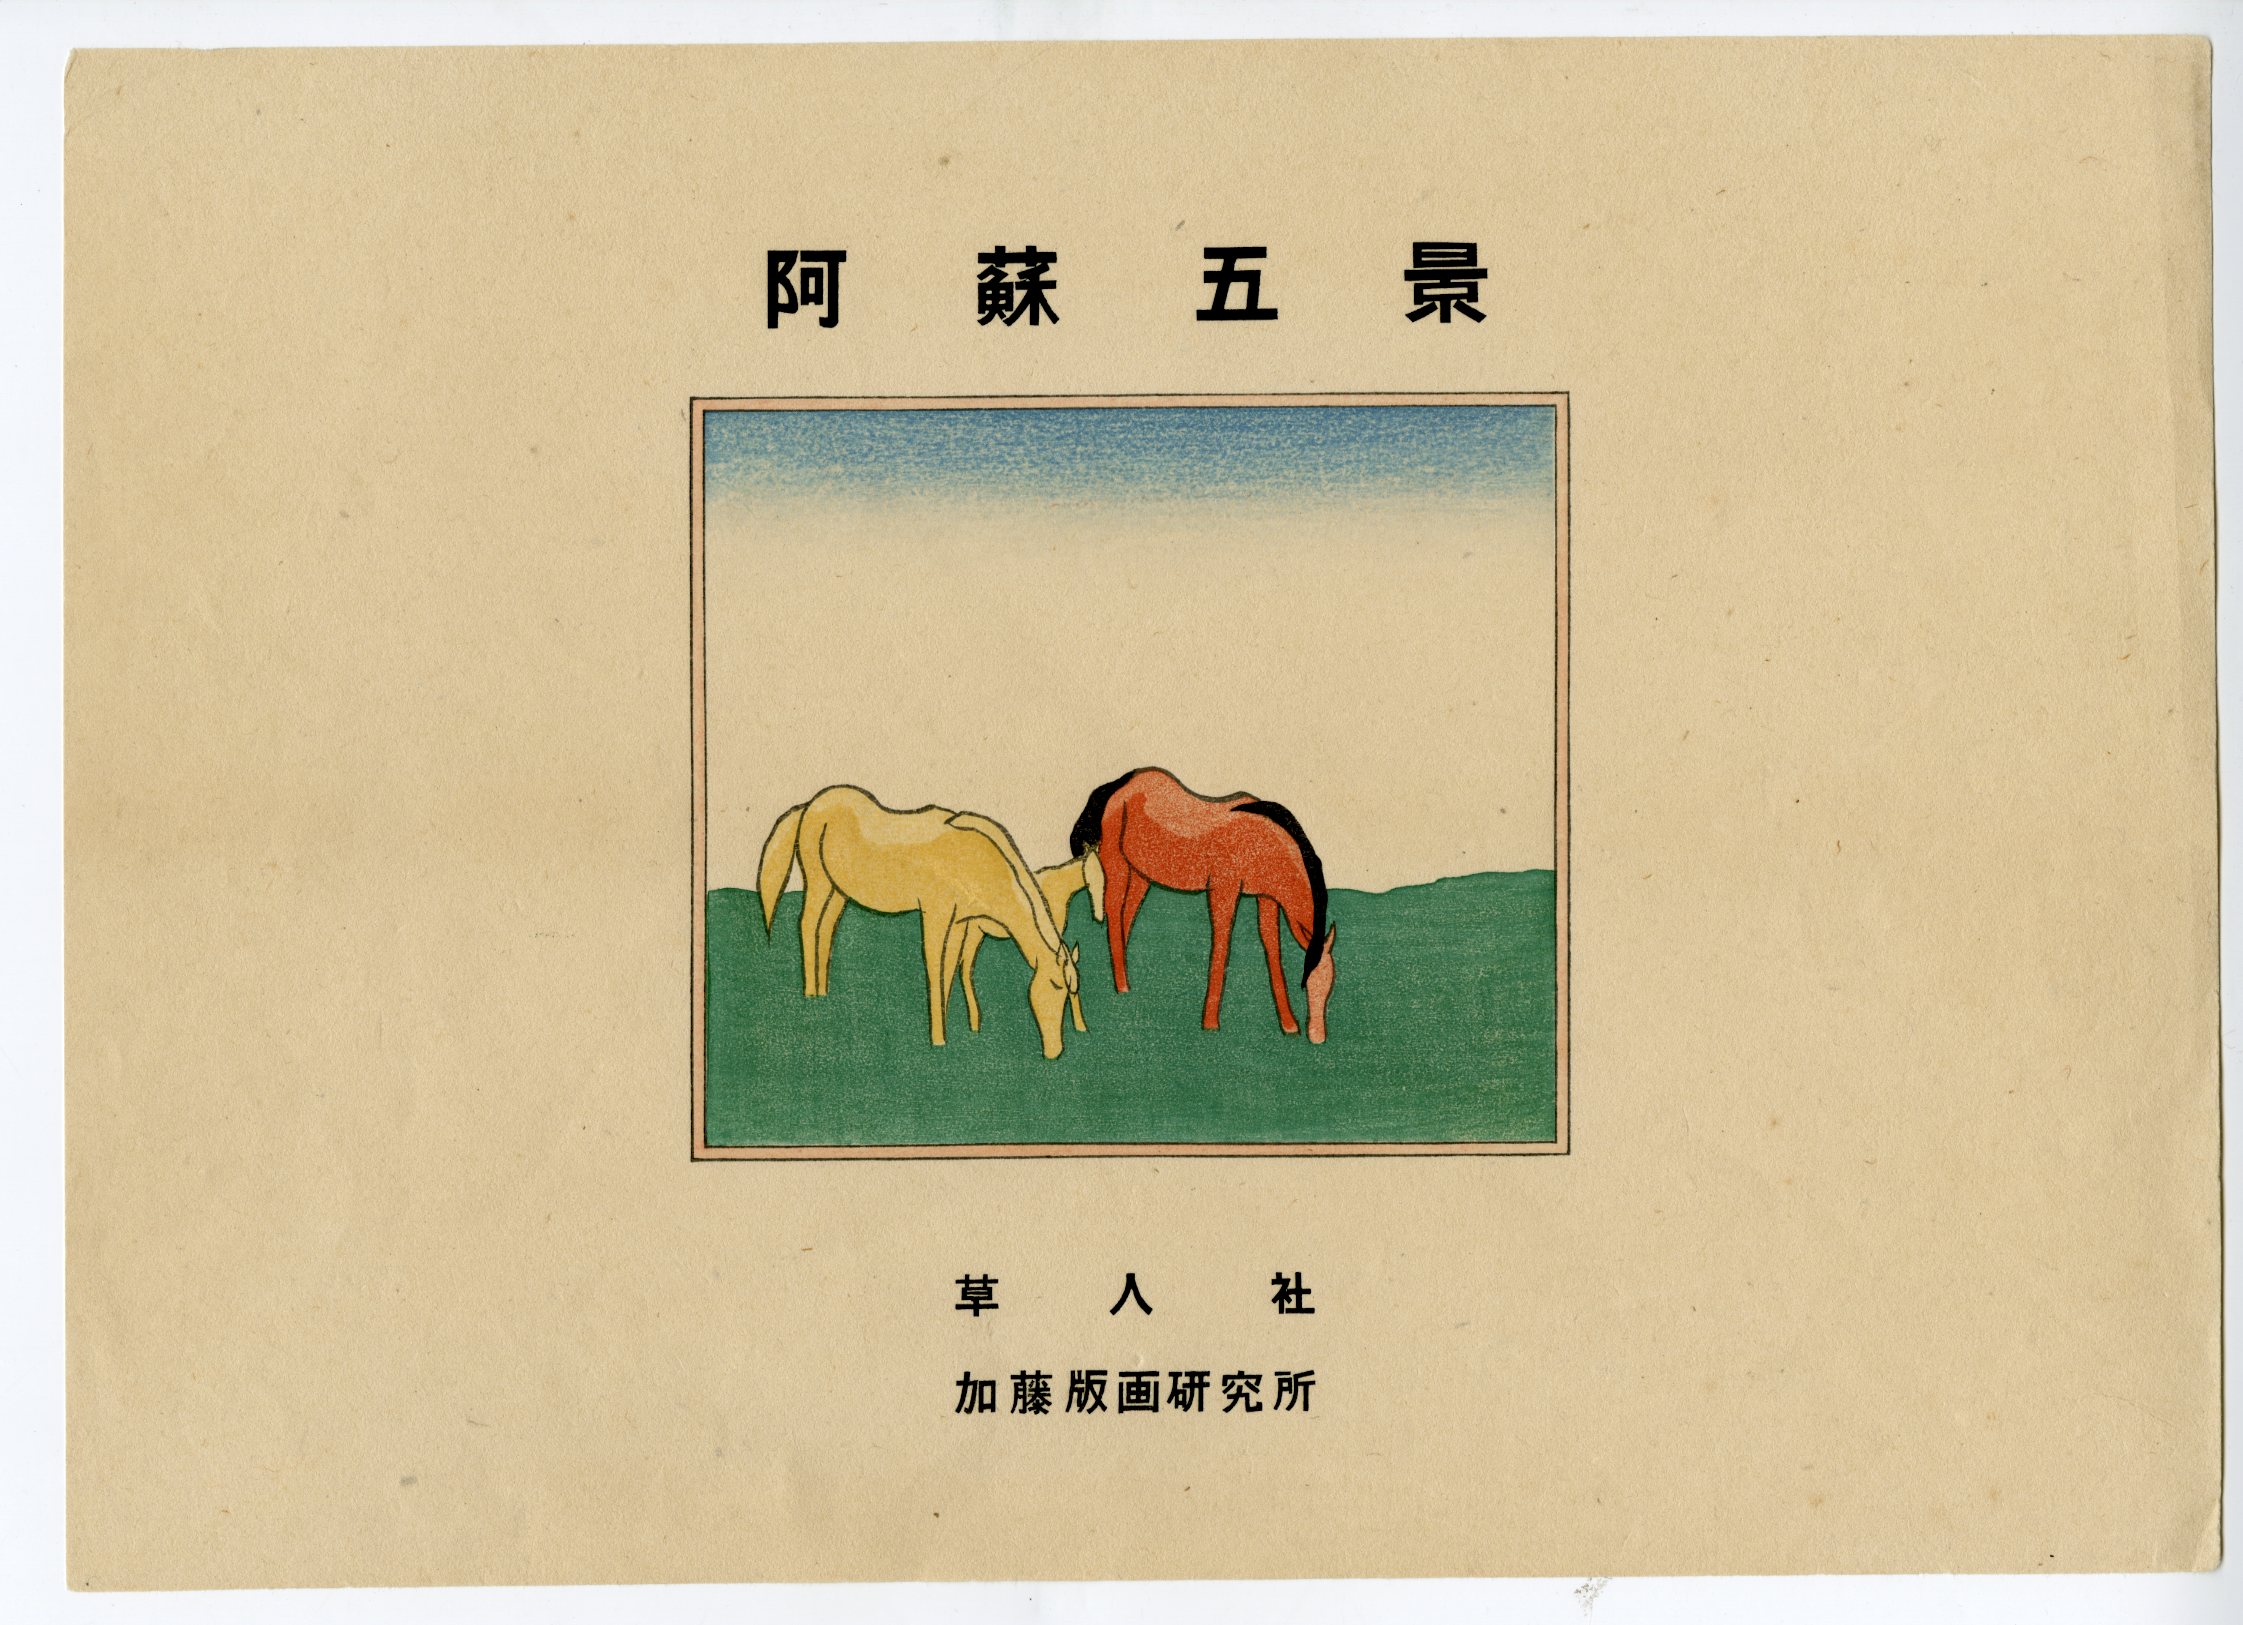 SHIN】坂本繁二郎 『月』『馬』復刻木版画集 ed.149/280 昭和58年作 - 美術品